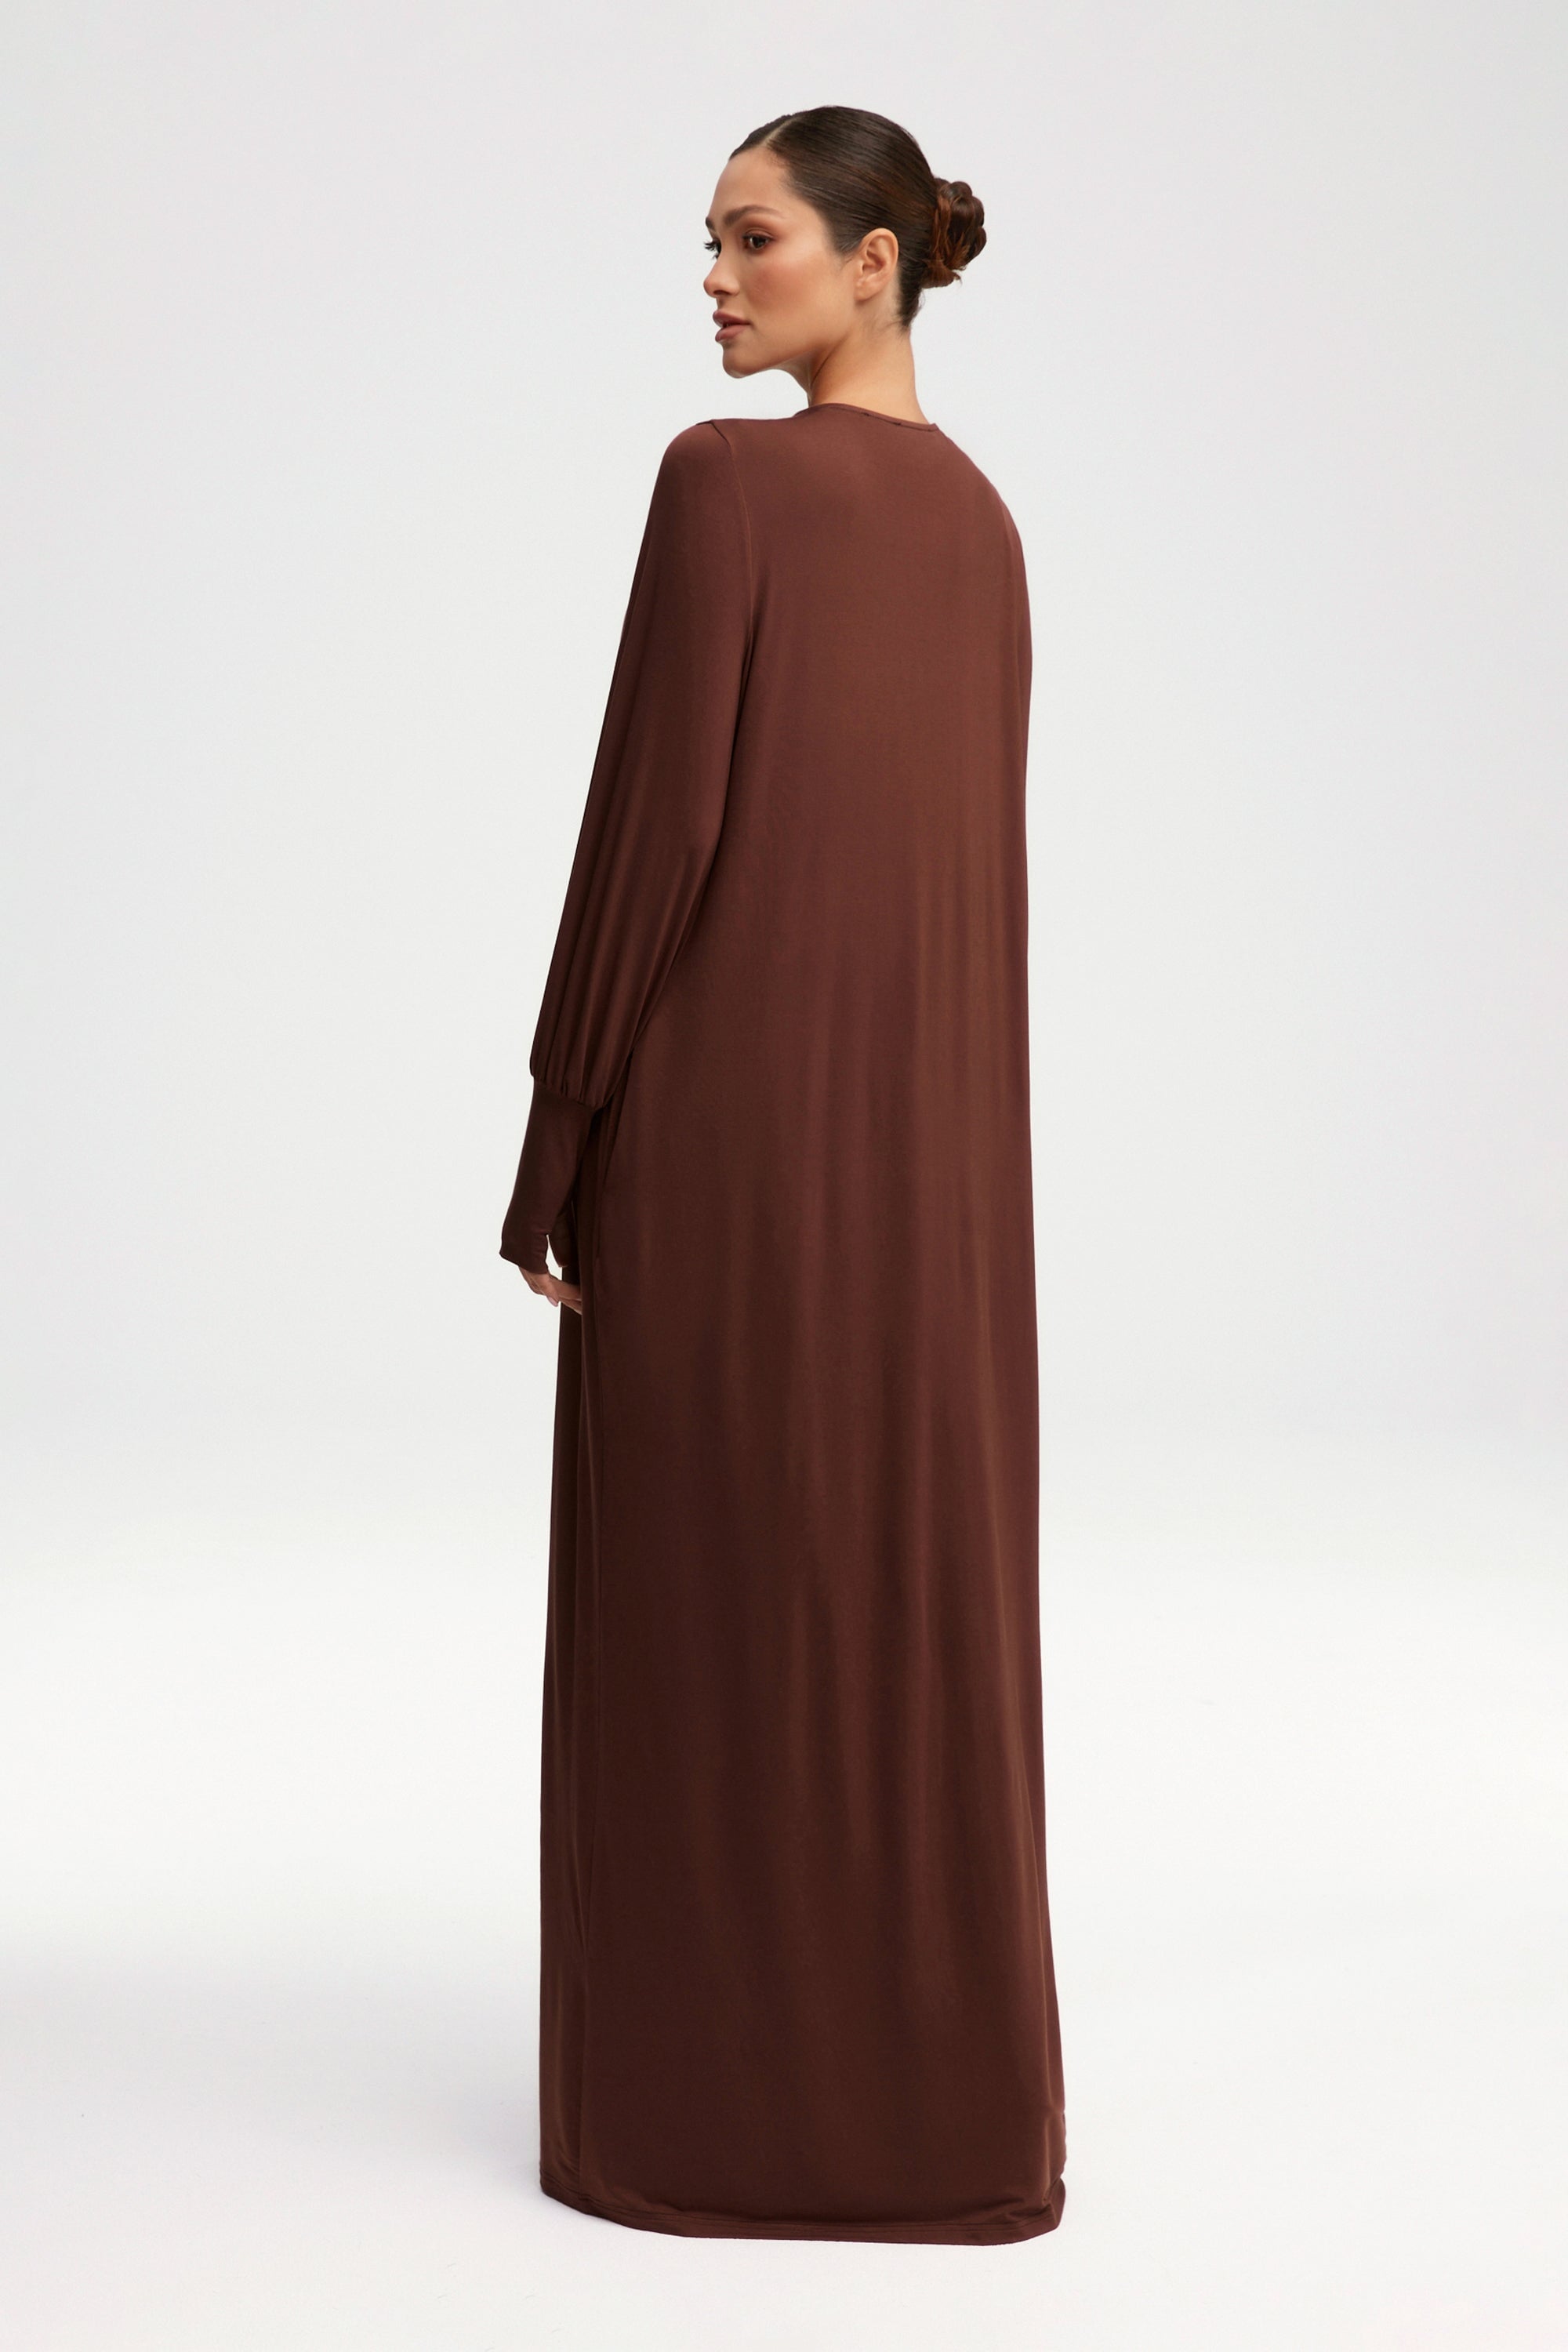 Jenin Jersey Open Abaya & Maxi Dress Set - Chocolate Clothing Veiled 